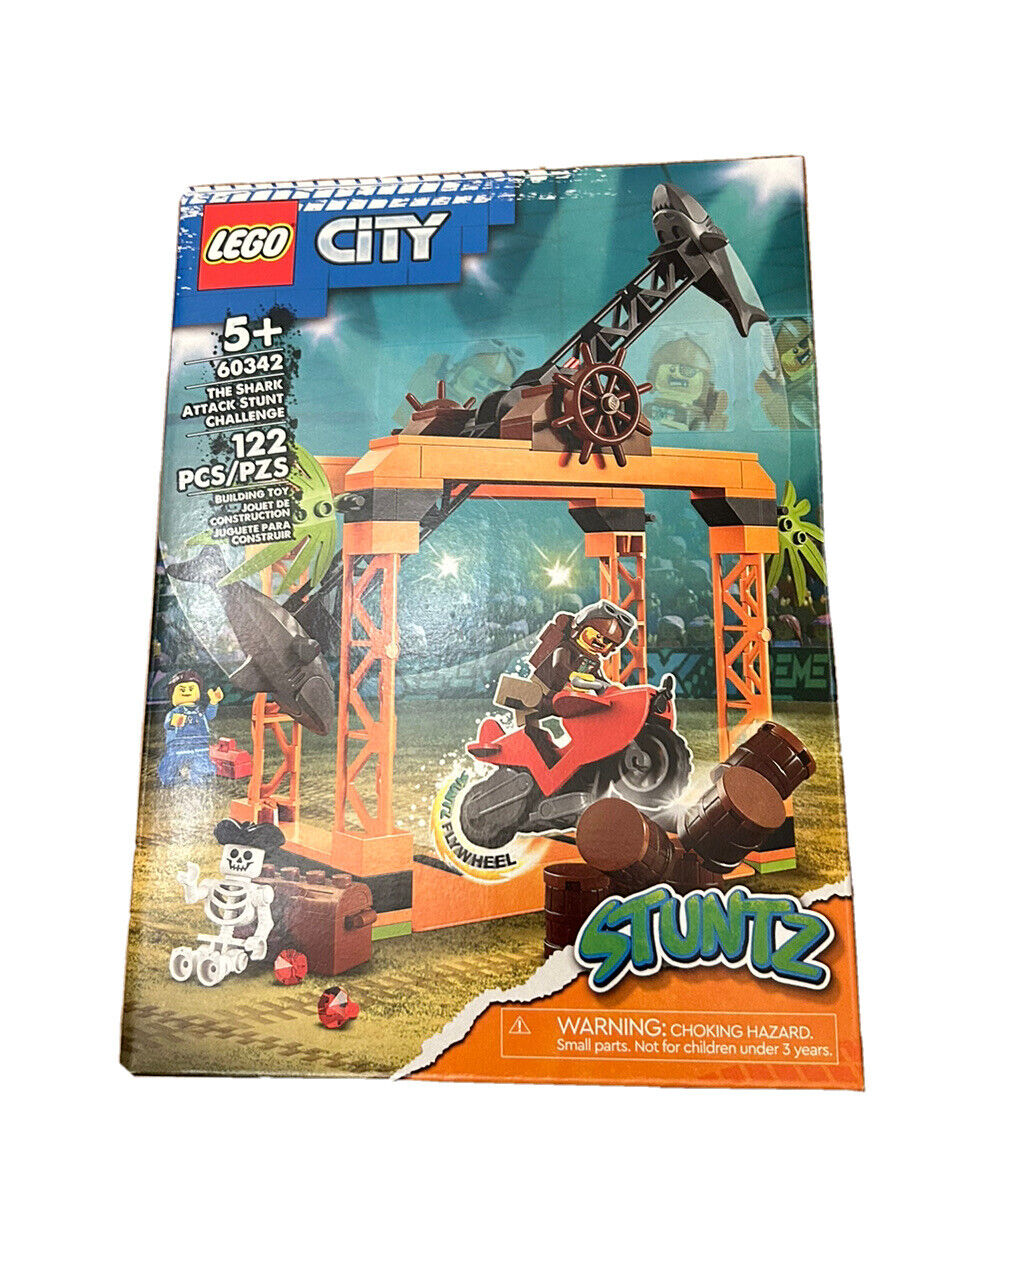 LEGO City Stuntz The Shark Attack Stunt Challenge Set 60342 (122 Pieces)